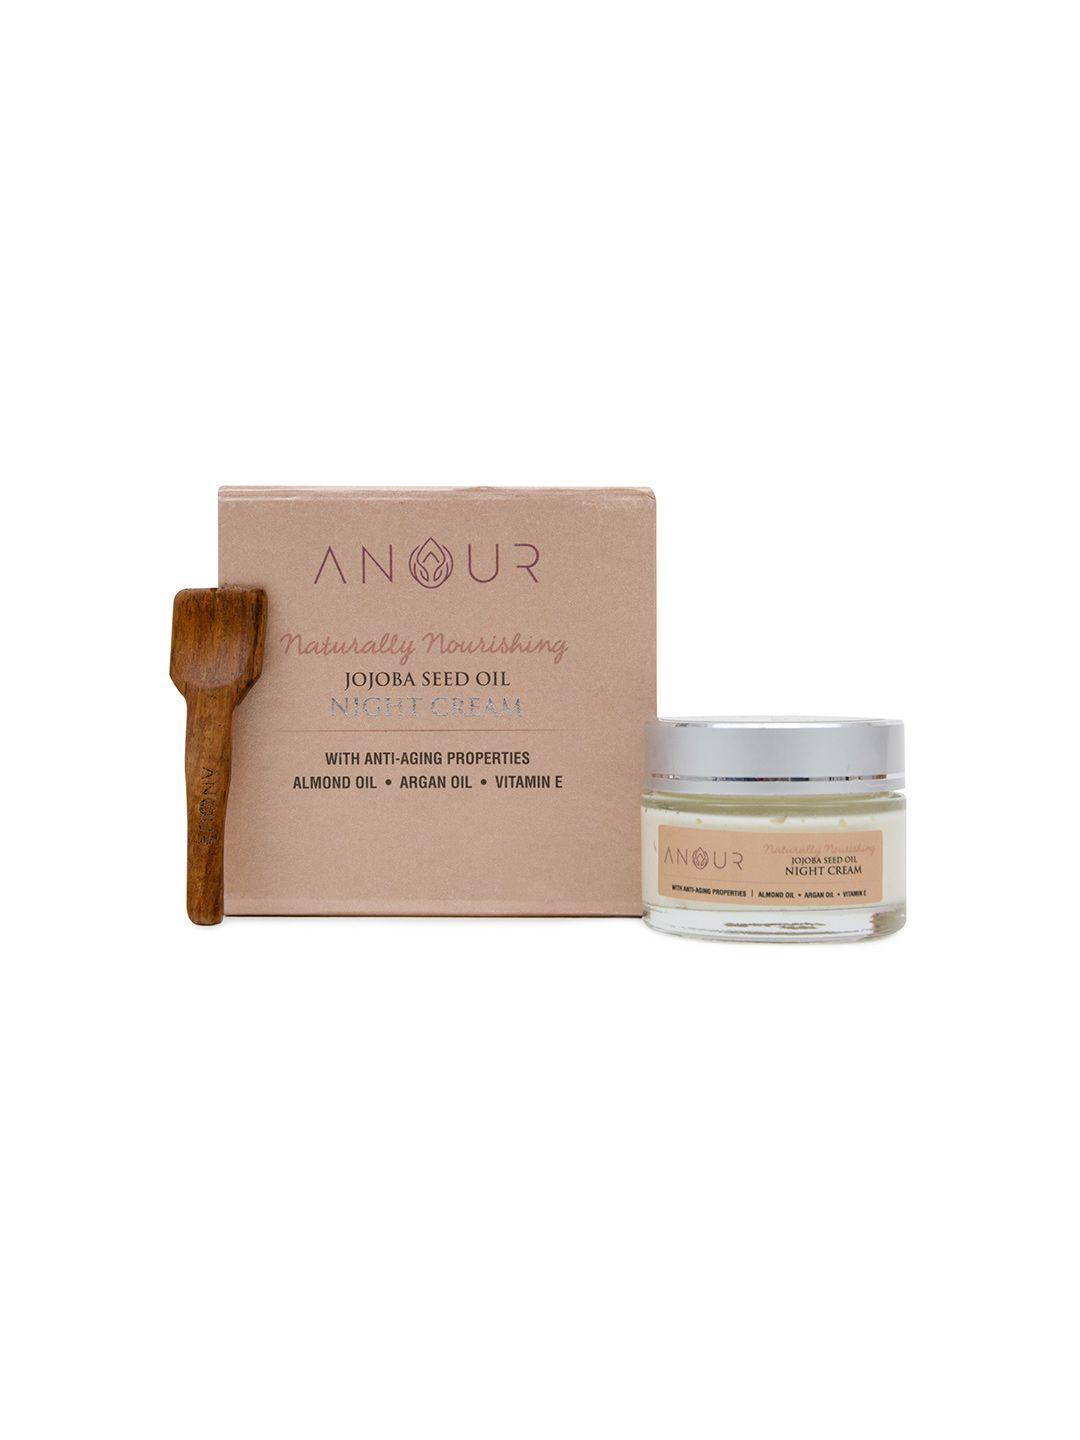 anour naturally nourishing jojoba seed oil night cream with almond oil & vitamin e - 50g